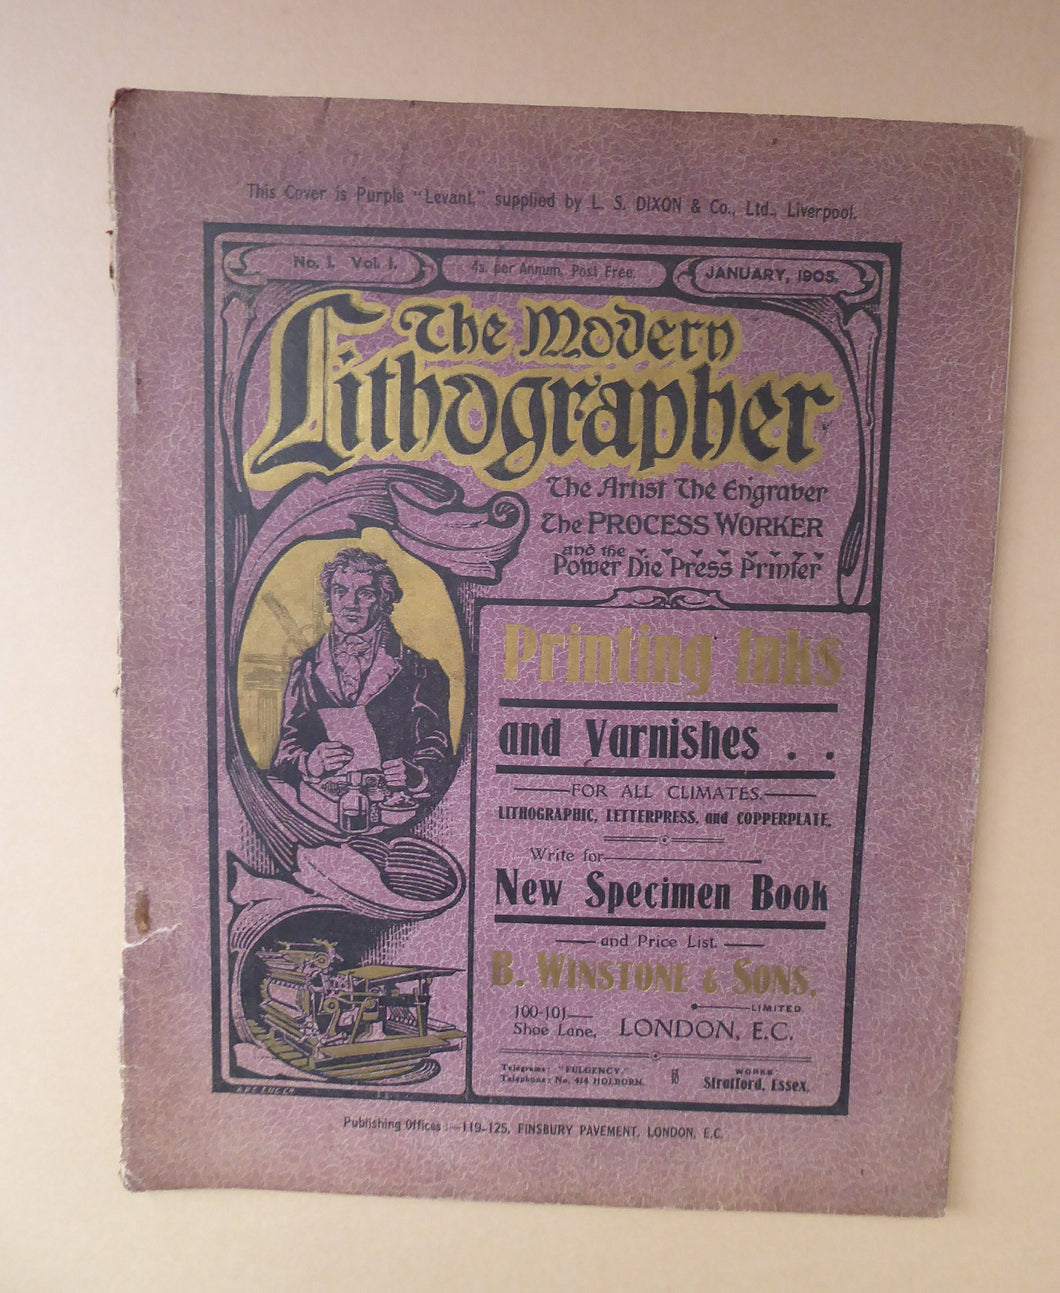 RARE 1905 ART MAGAZINE. The Modern Lithographer. Published London January 1905; Includes Genuine Art Nouveau Lithograph